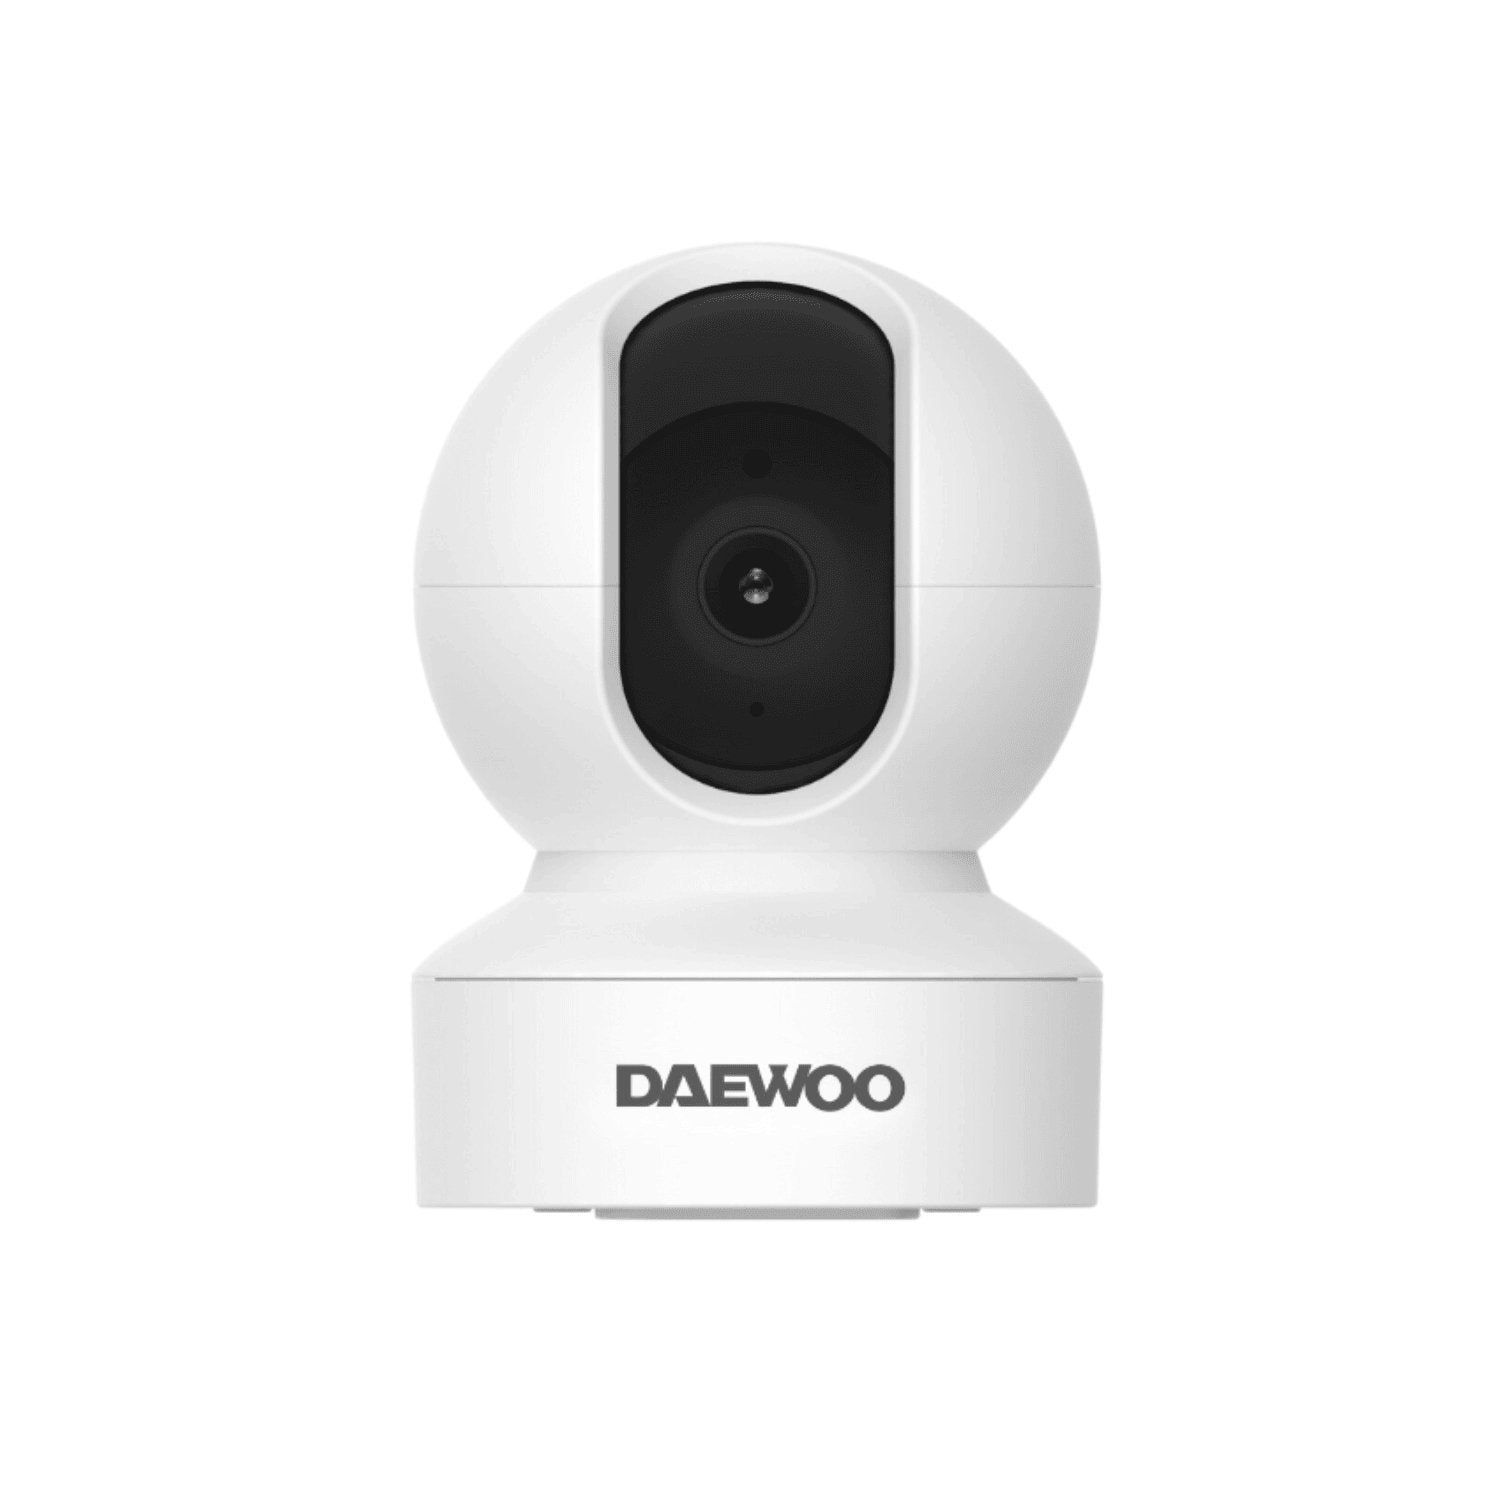 AM315 | Alarme Daewoo Wifi / GSM 4G - Daewoo Security